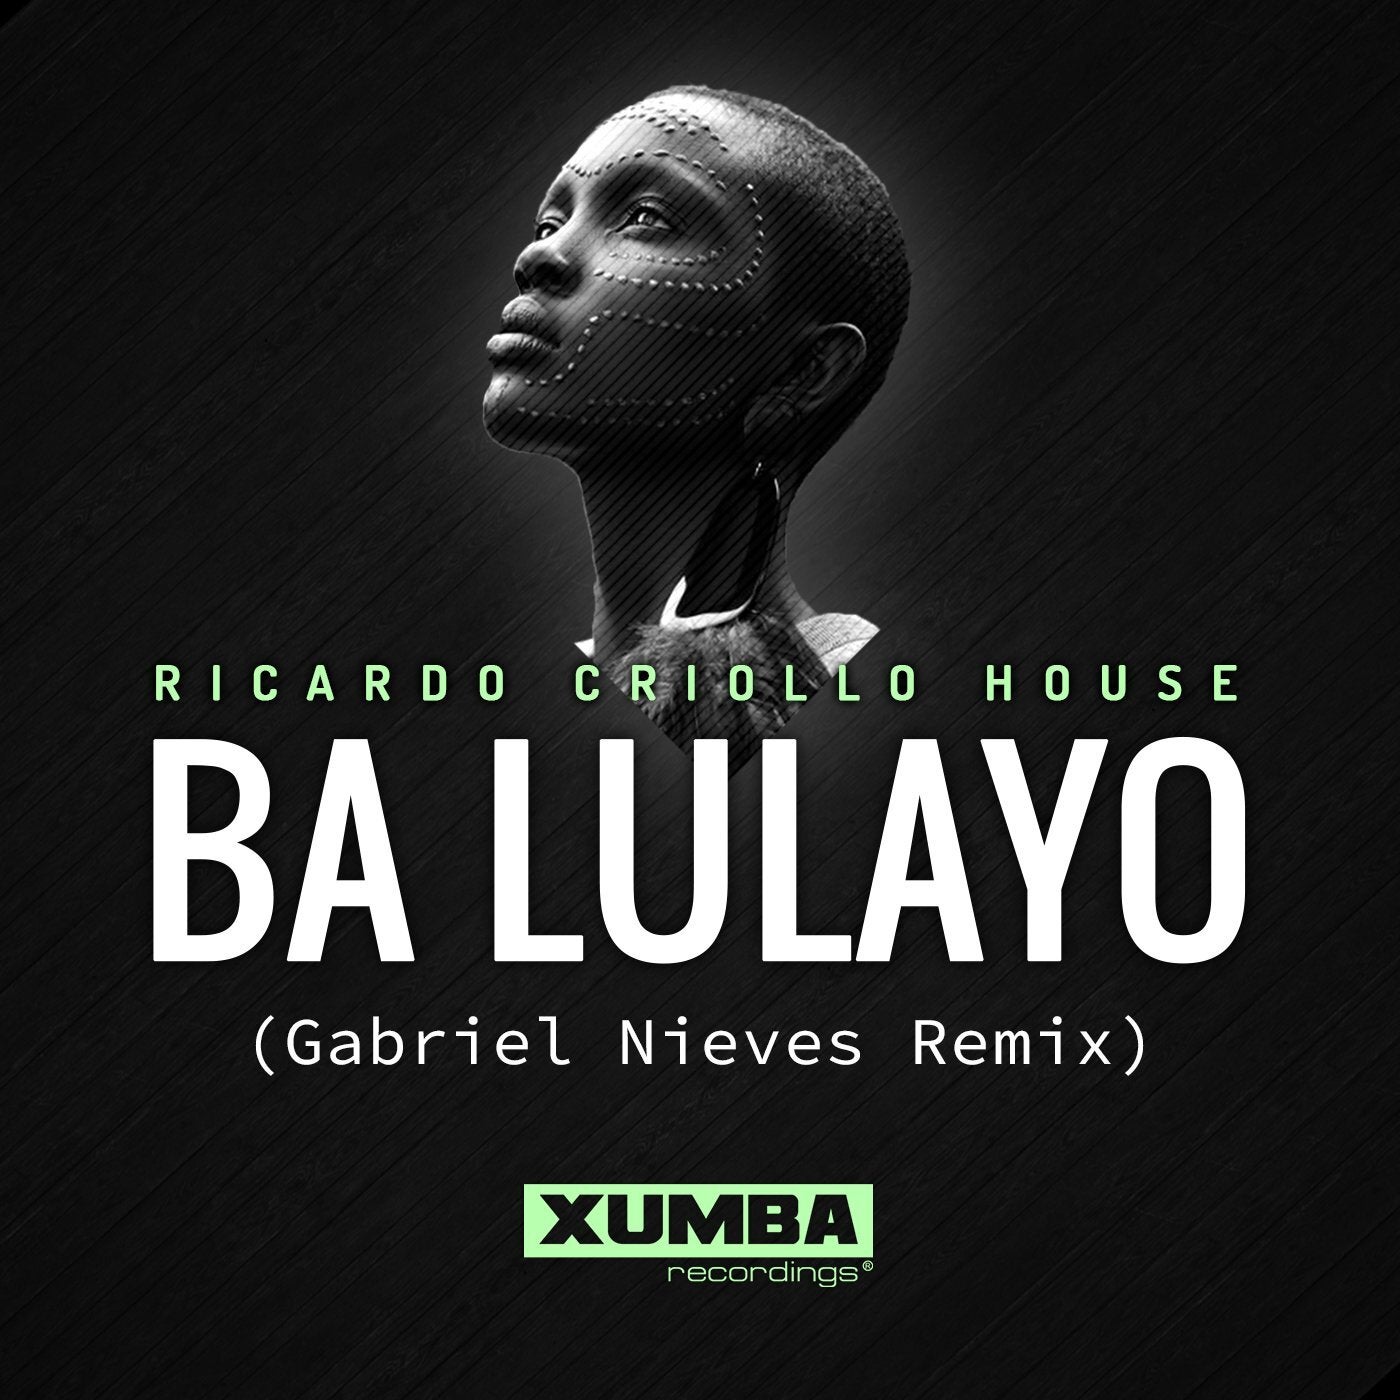 Ba Bulayo (Gabriel Nieves Remix)